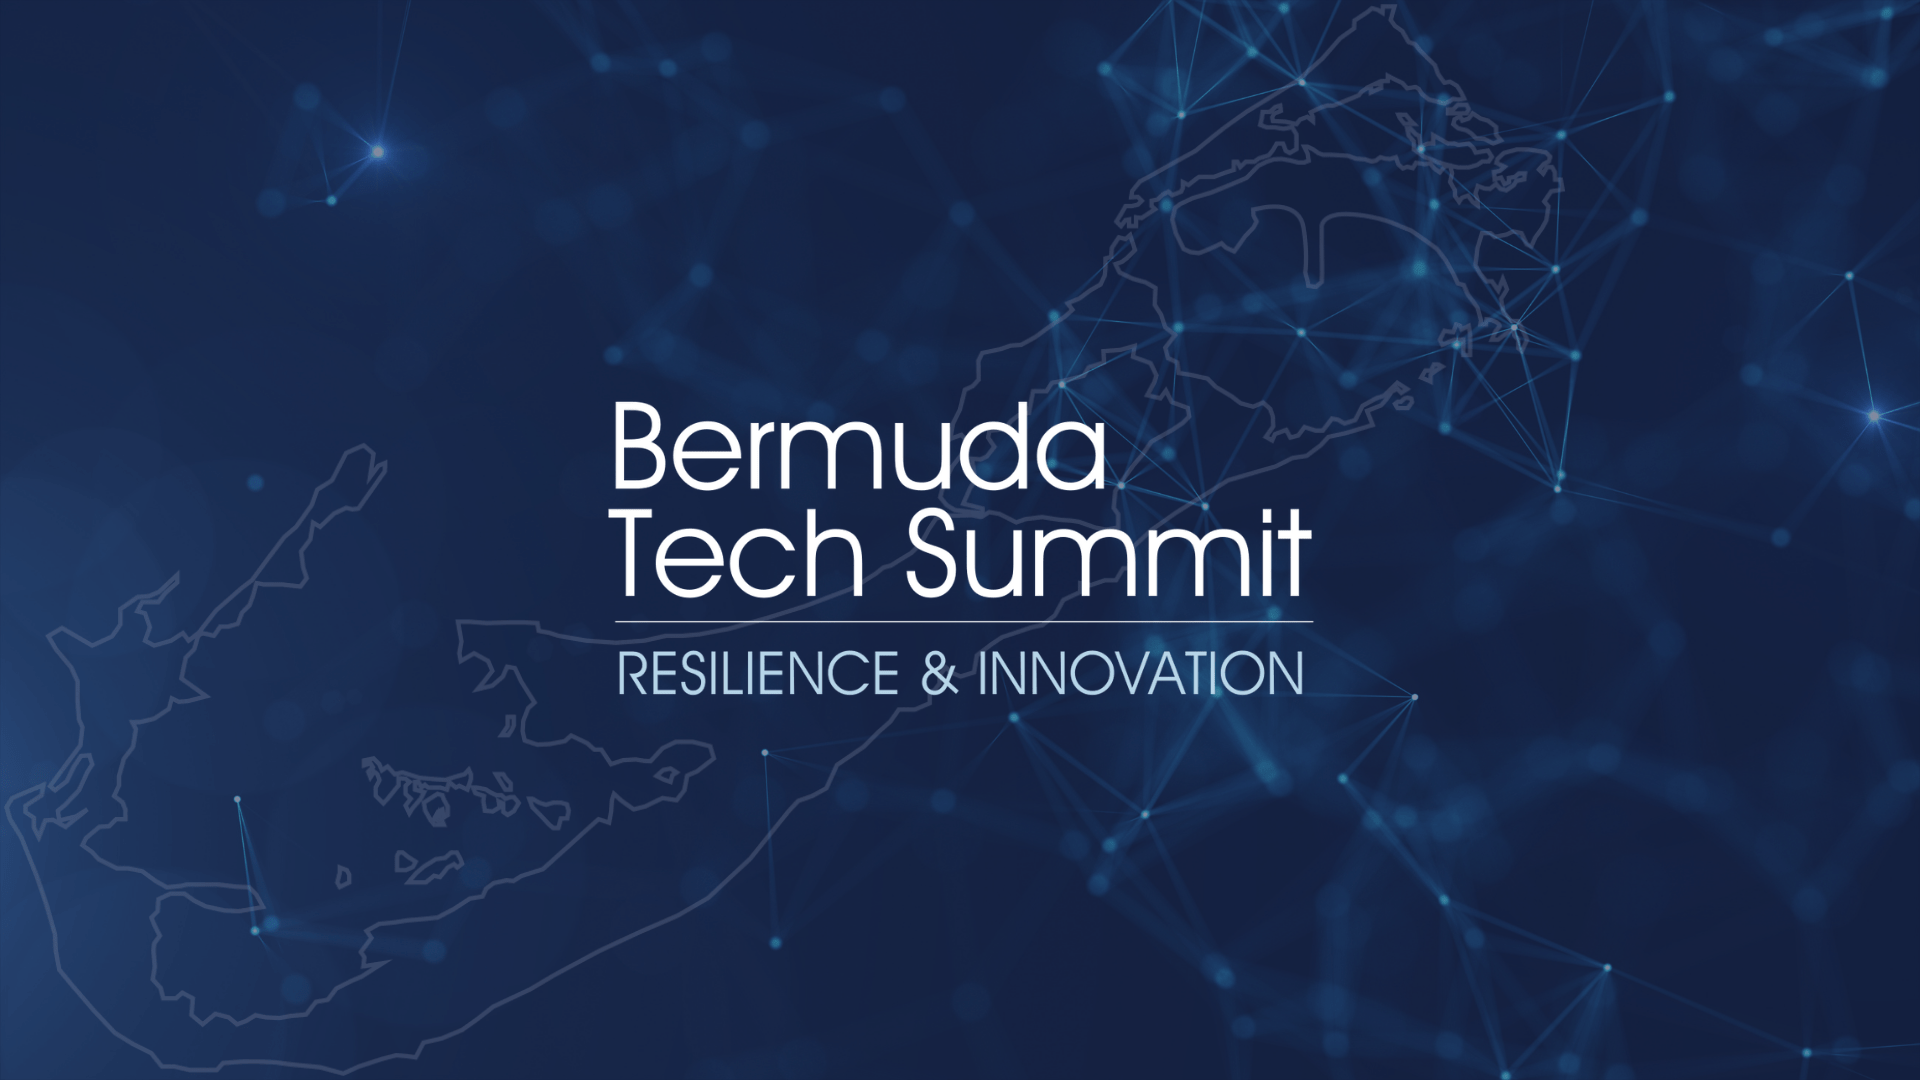 Bermuda Tech Summit Showcases Innovation